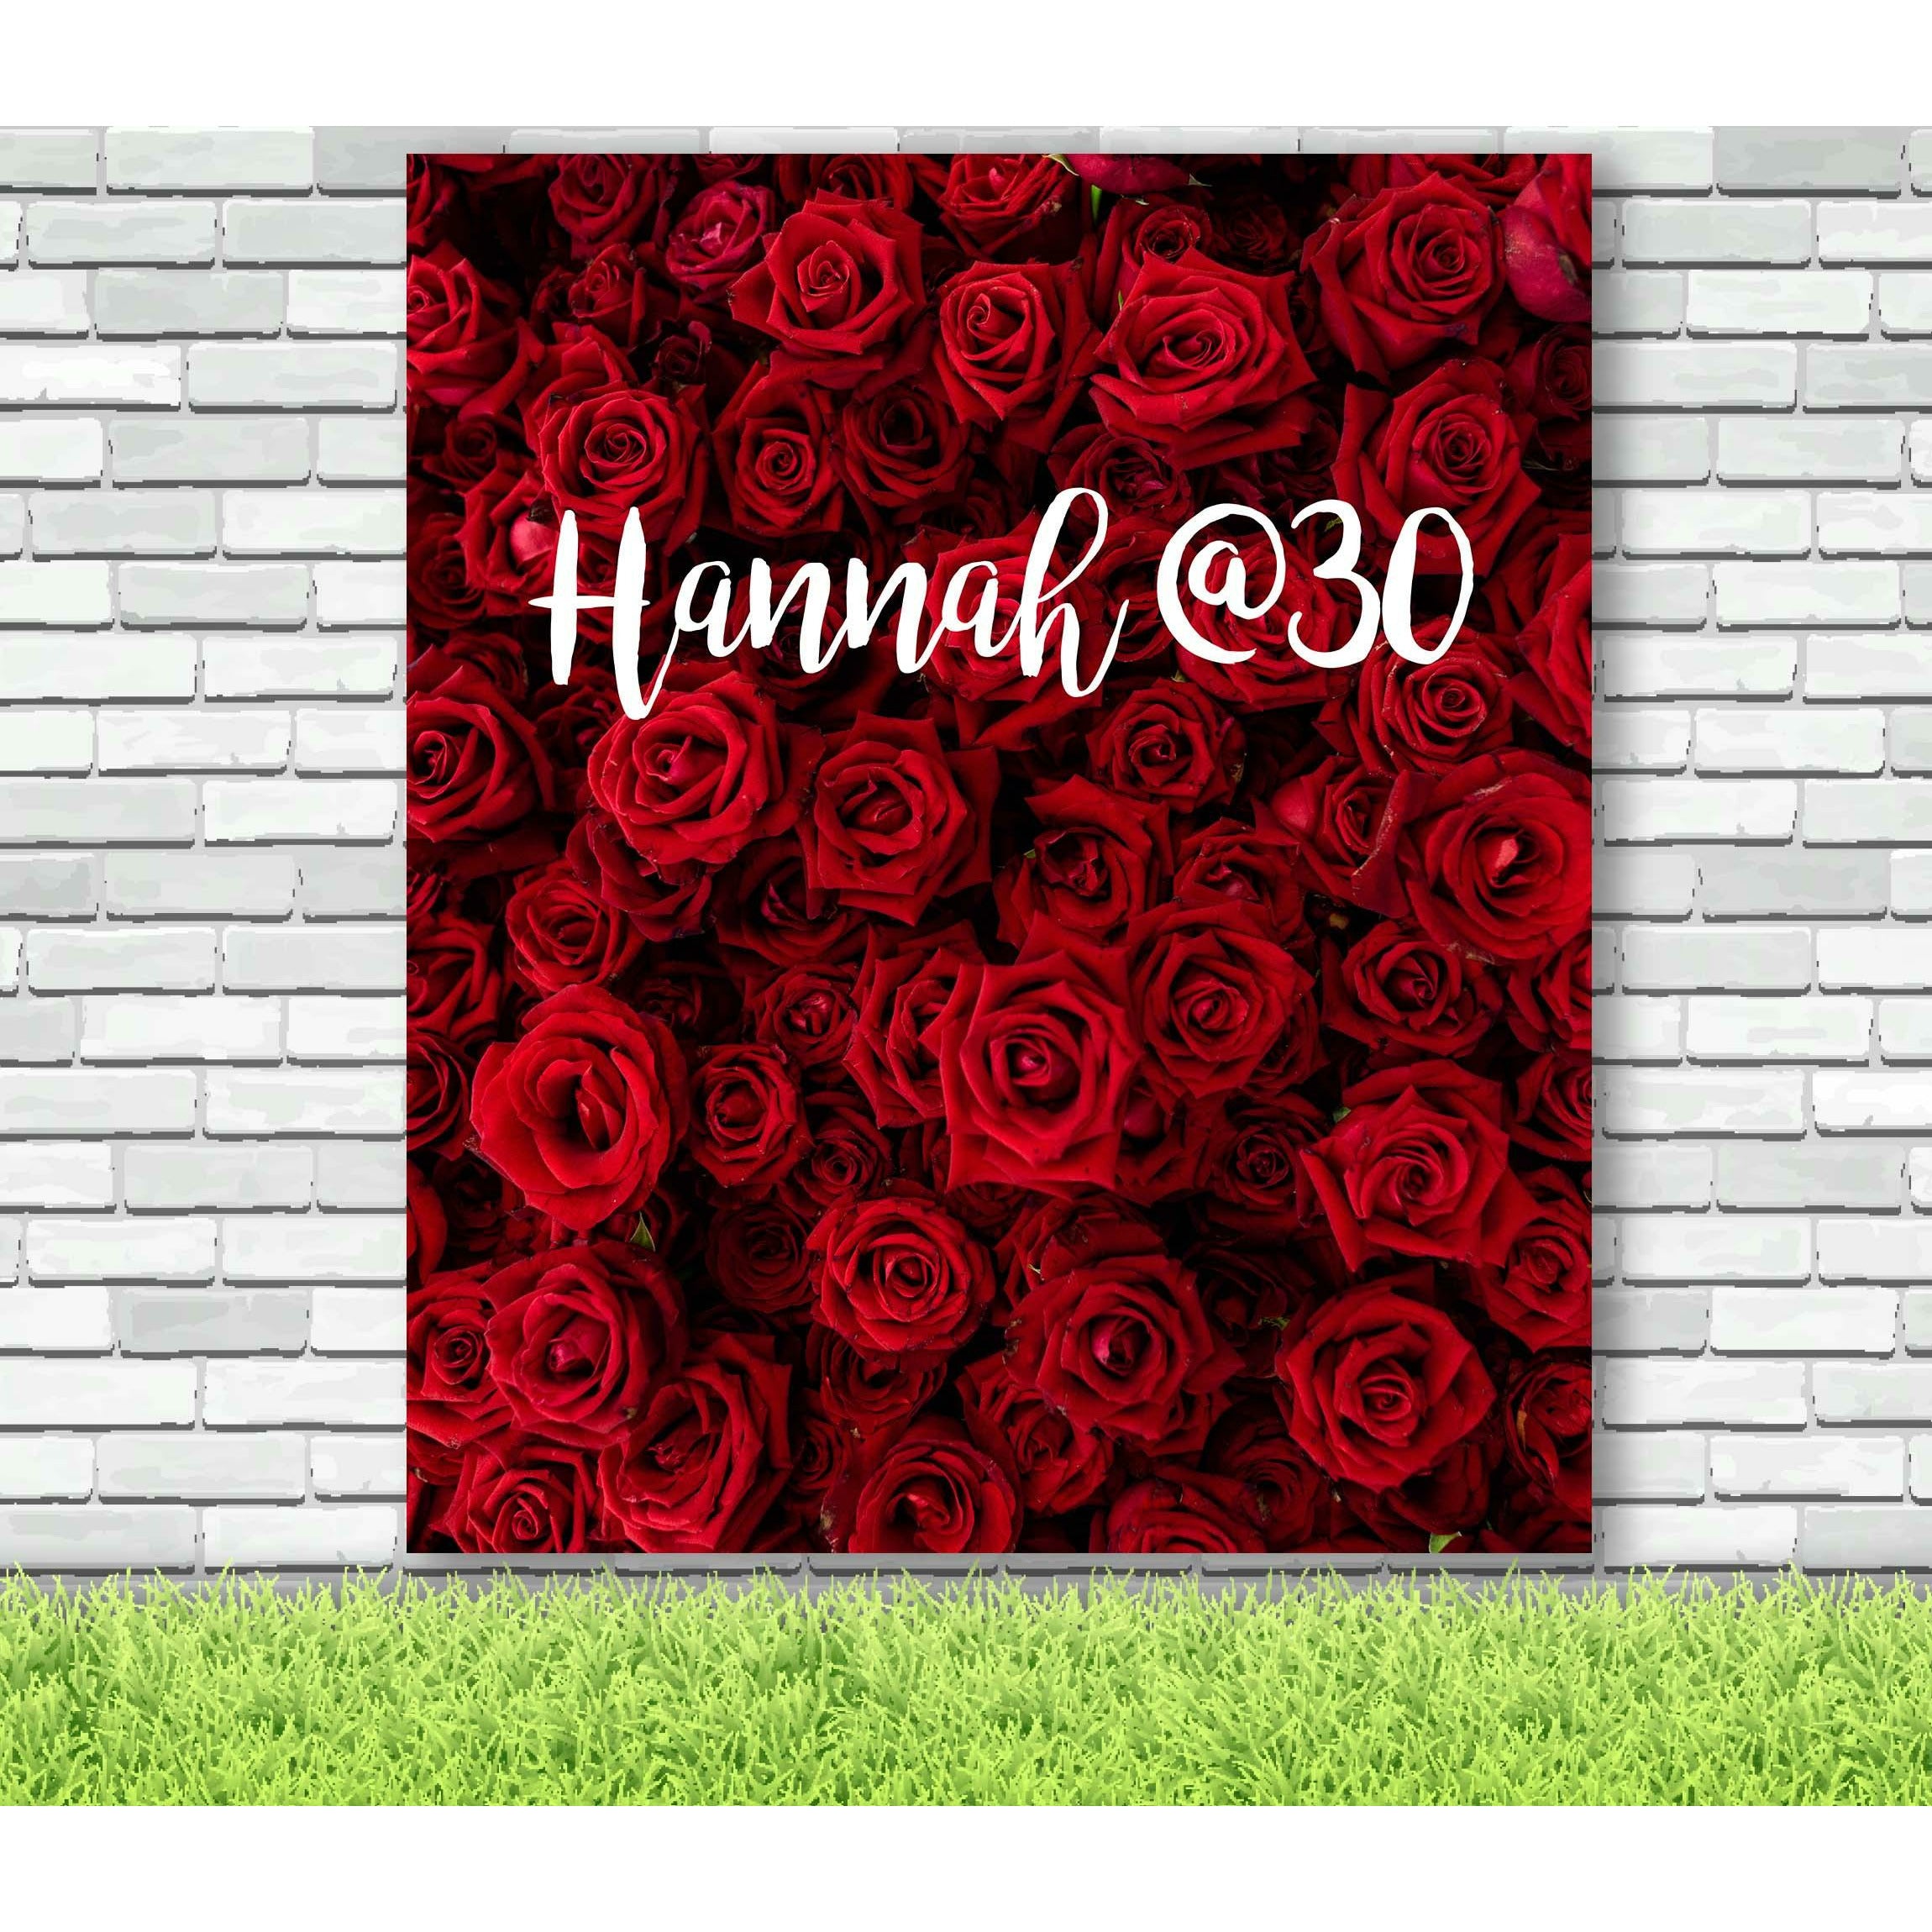 Red Rose Flower Backdrop - iJay Backdrops